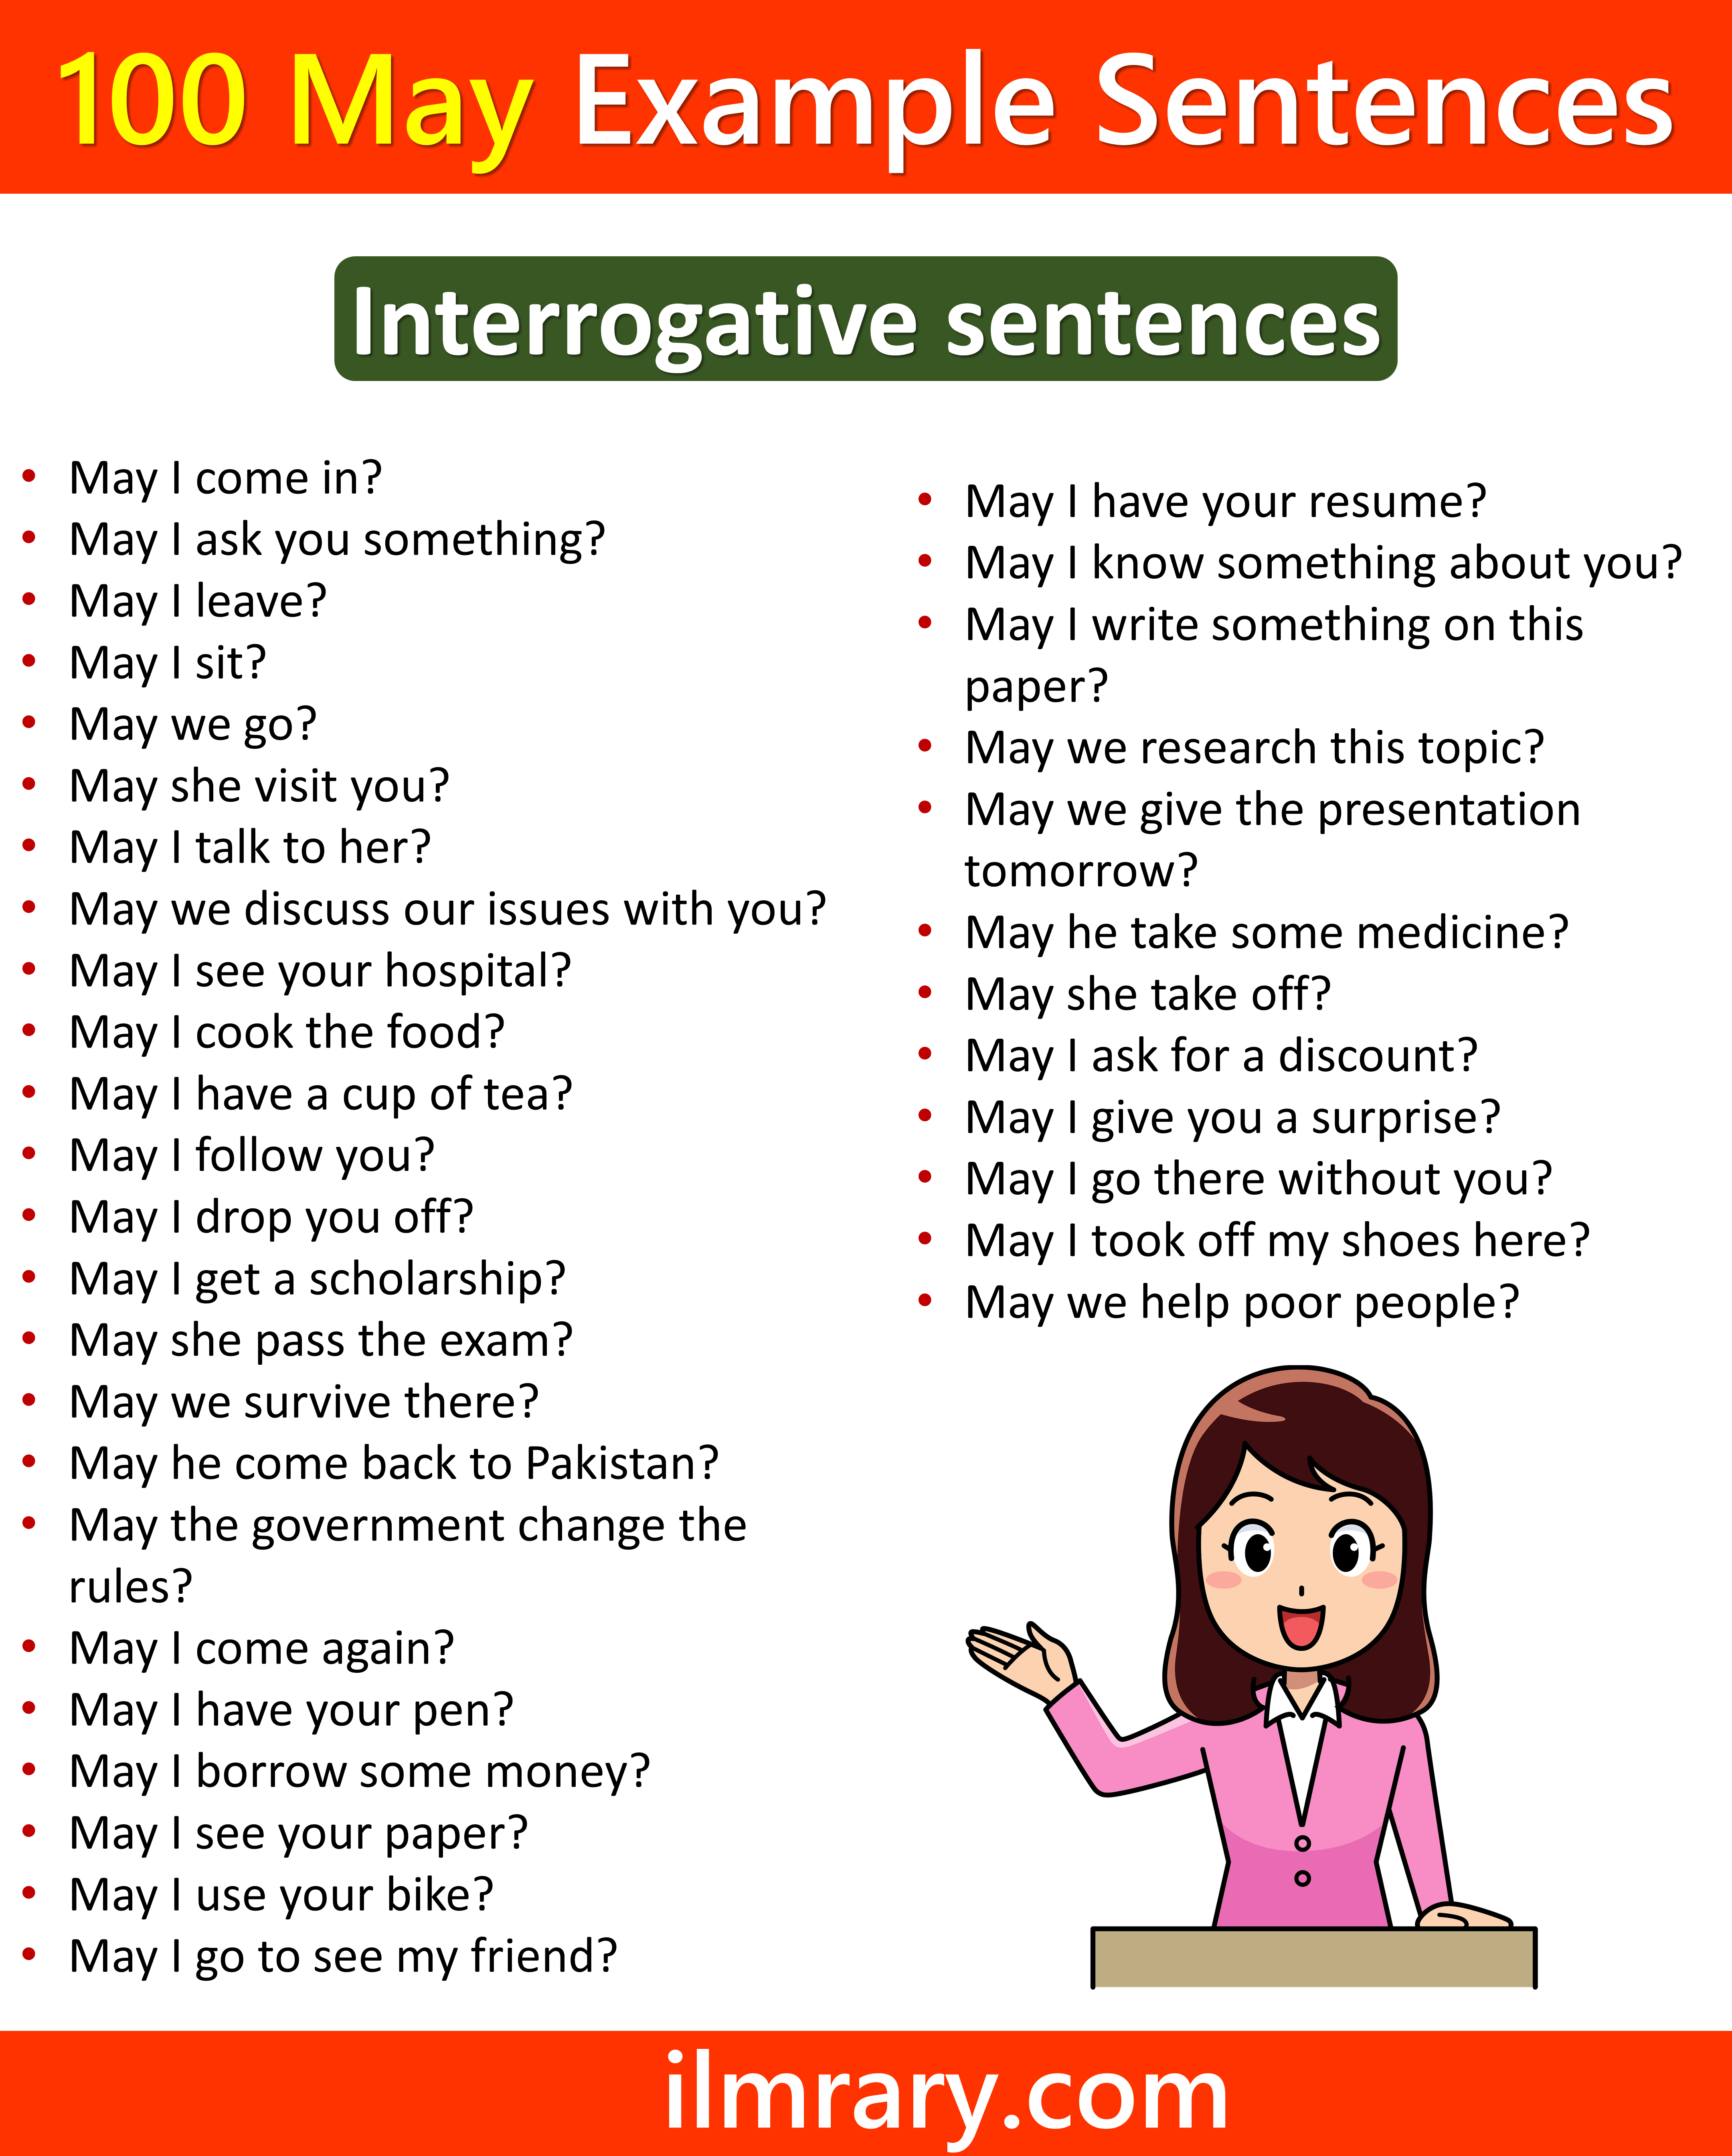 Use May in interrogative Sentences |100 Sentences Using May